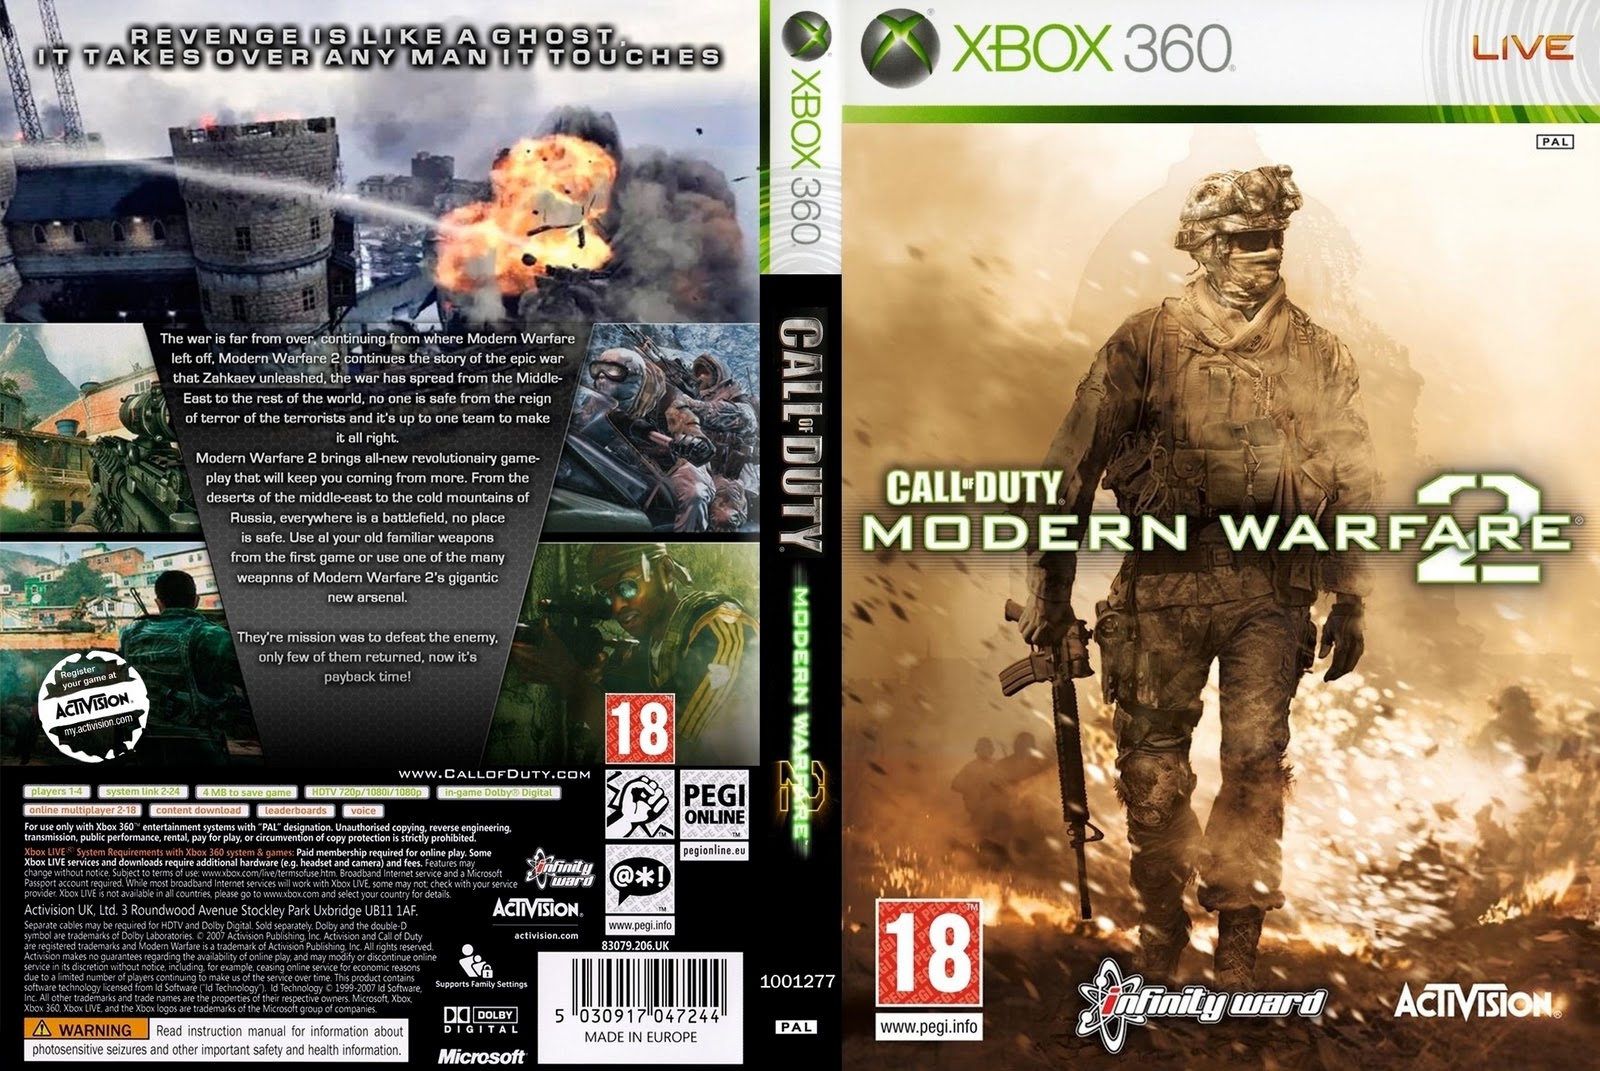 modern warfare digital code xbox